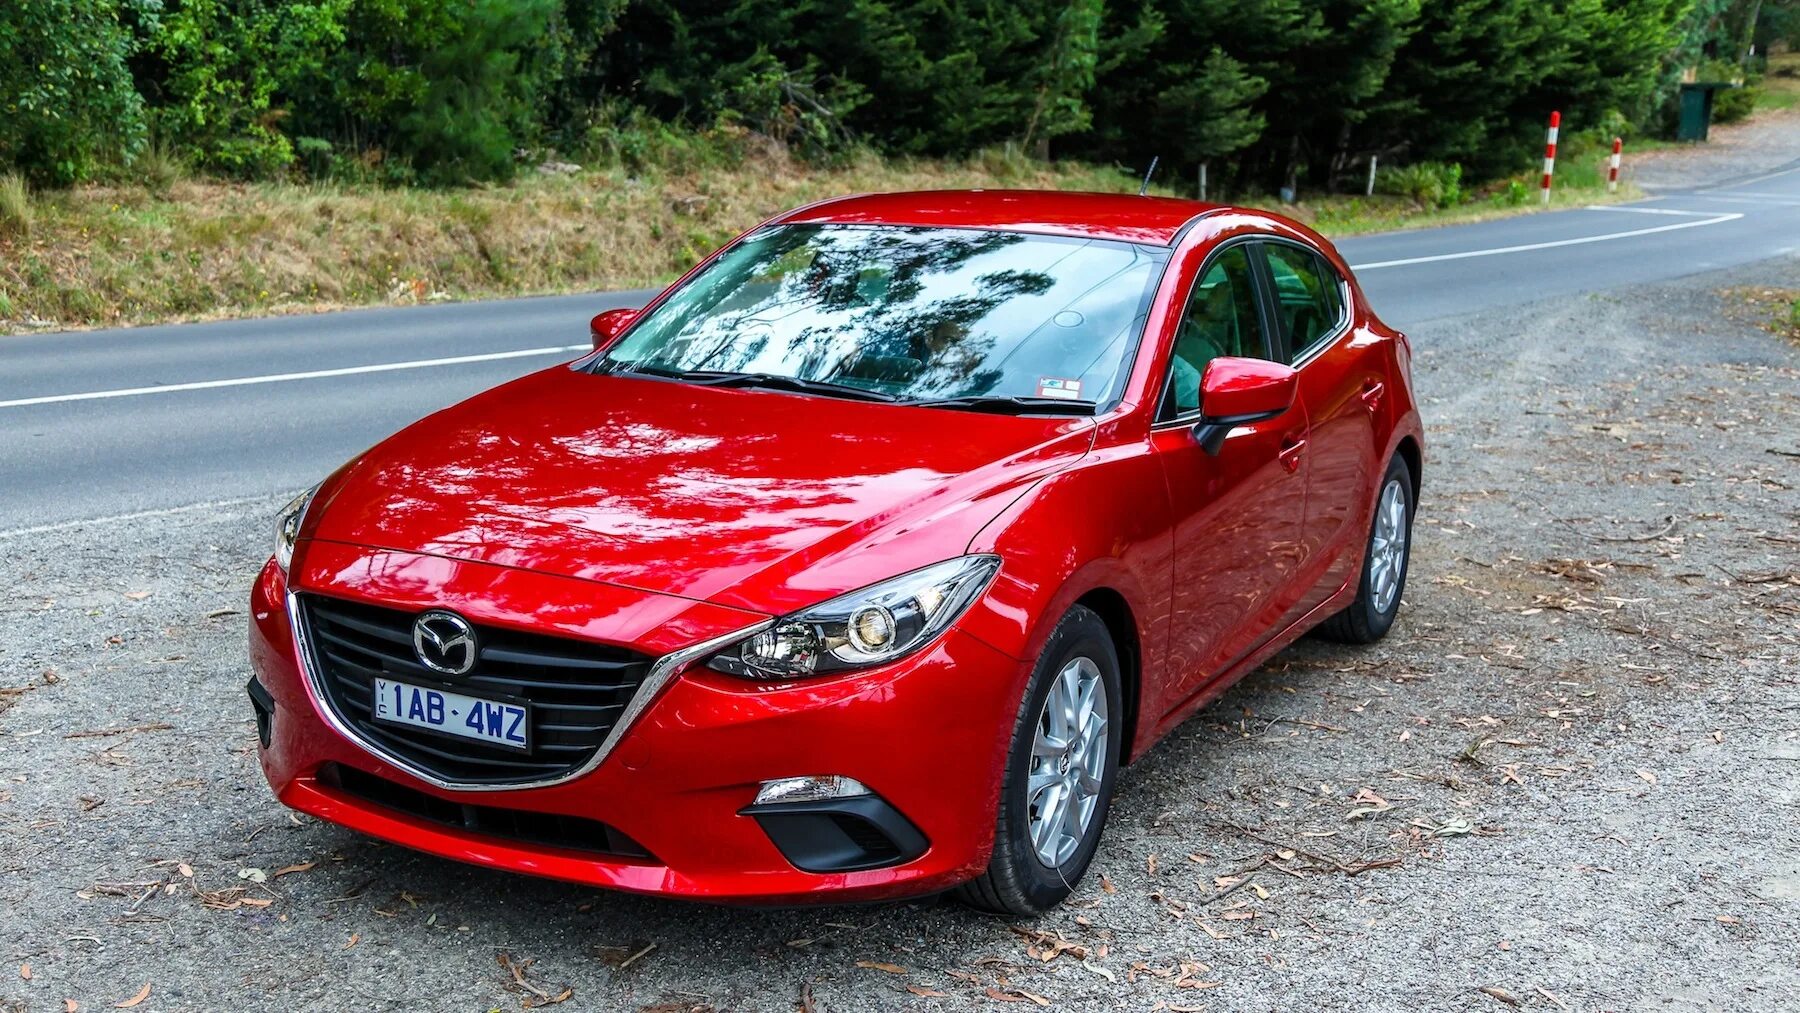 Мазда спб купить новую. Mazda 3 2014. Мазда 3 2014 цвет красный. Мазда 3 Review. Мазда 2014.